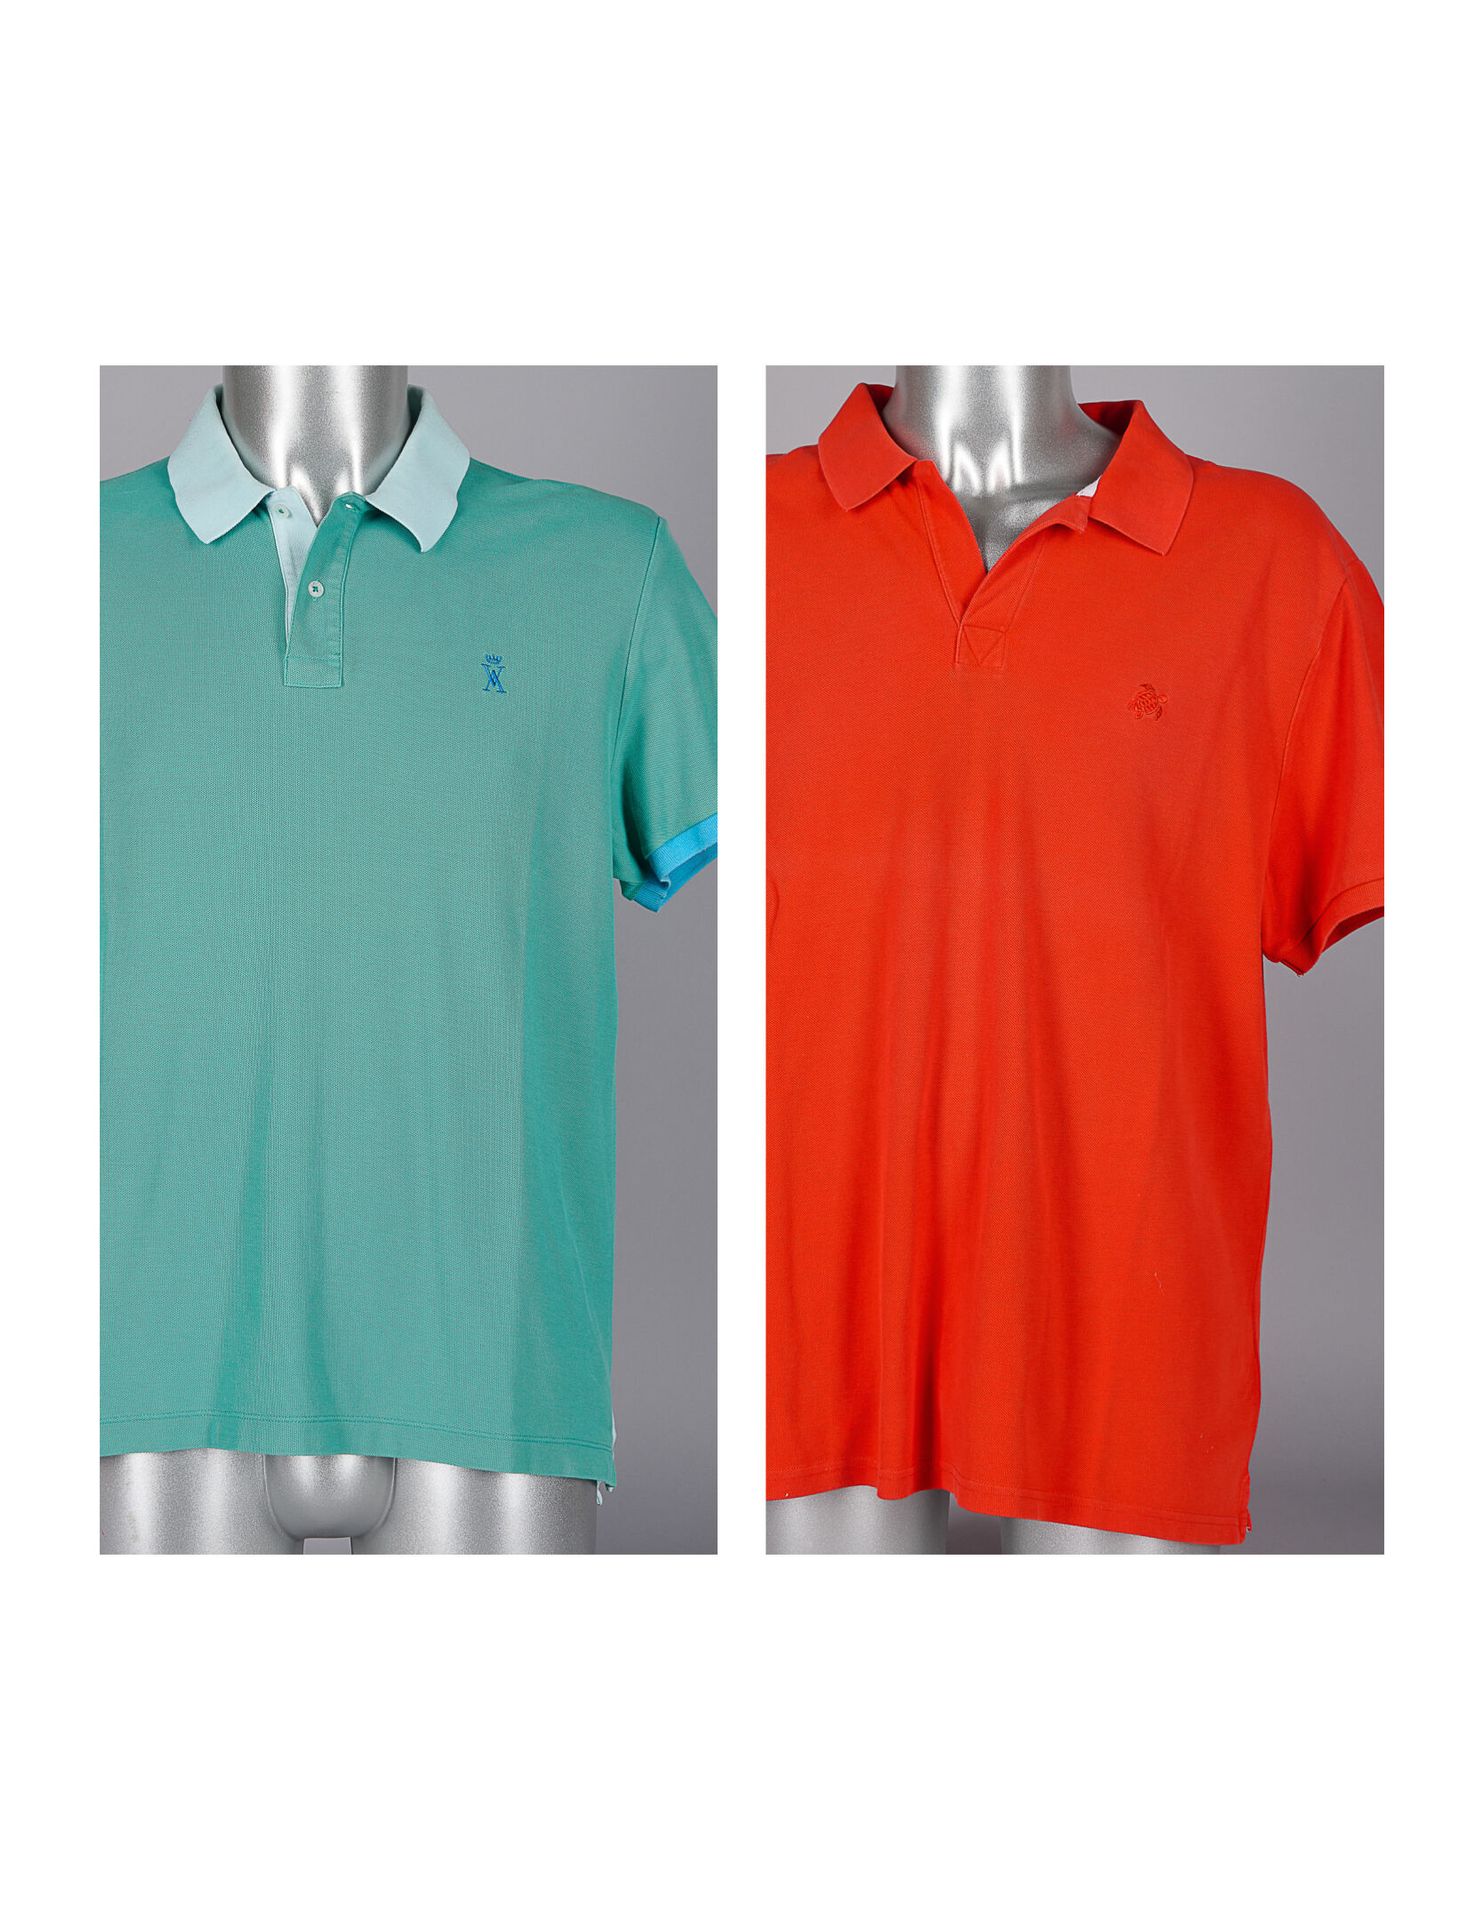 VICOMTE A., VILEBREQUIN 两件蜂窝状棉质POLO衫：第一件是玉蓝色（T XL），第二件是罂粟色（T XXXL）（不保证条件）。